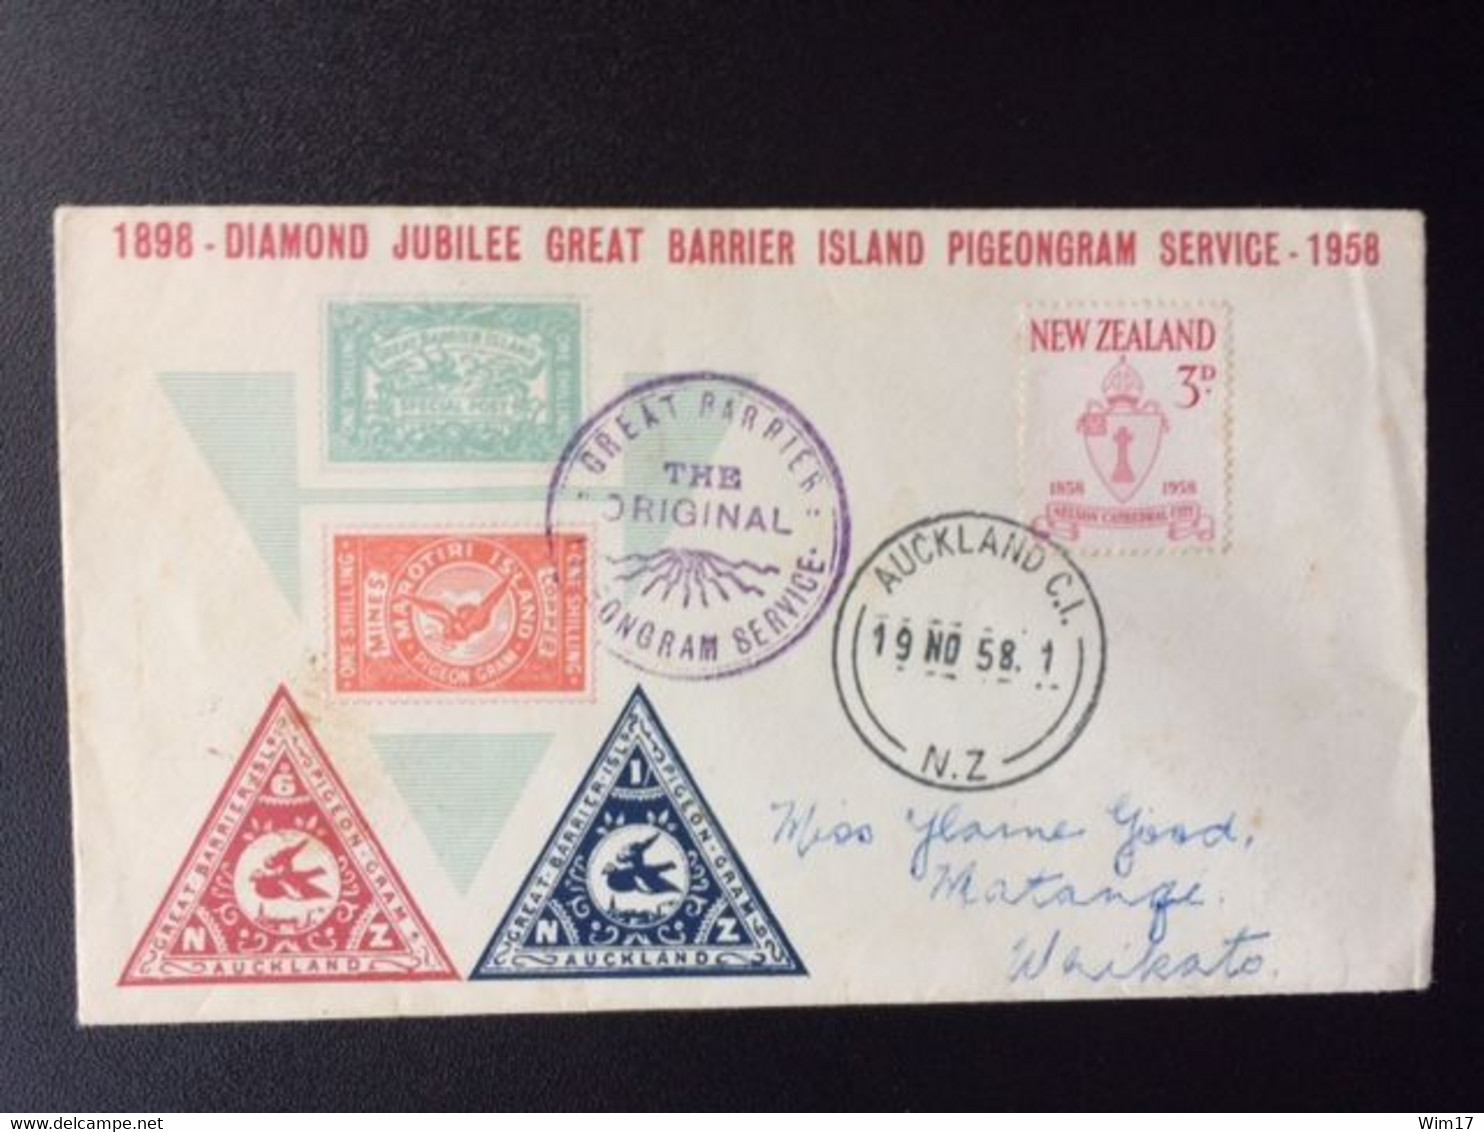 NEW ZEALAND 1958 GREAT BARRIER ISLAND PIGEONGRAM SERVICE 19-11-1958 TO WAIKATO NIEUW ZEELAND - Cartas & Documentos